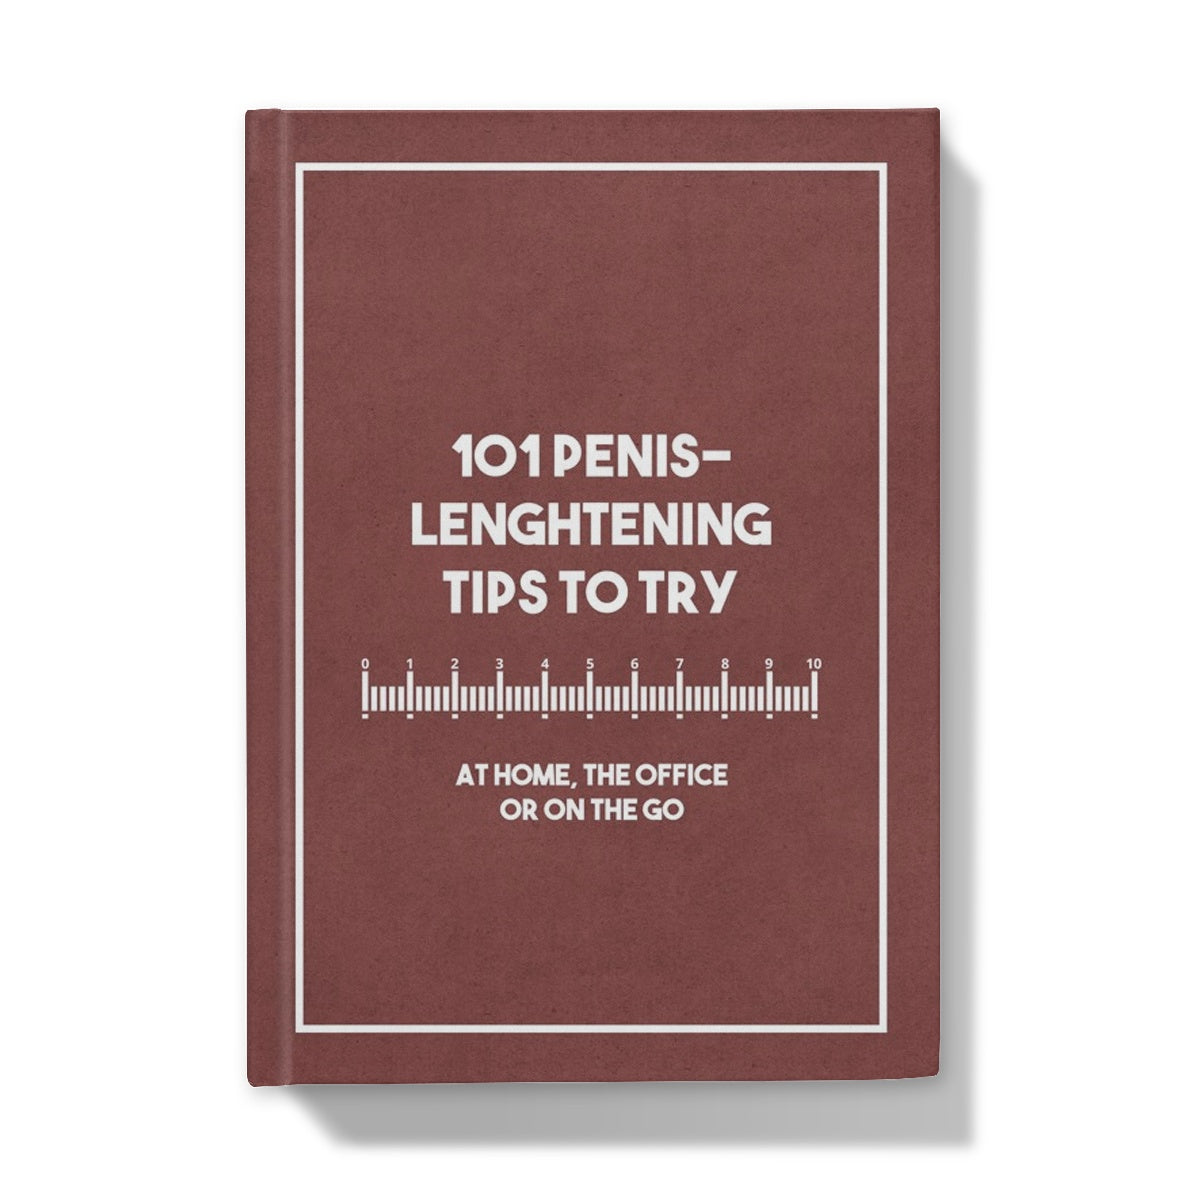 101 Penislenghtening tips - Anteckningsbok